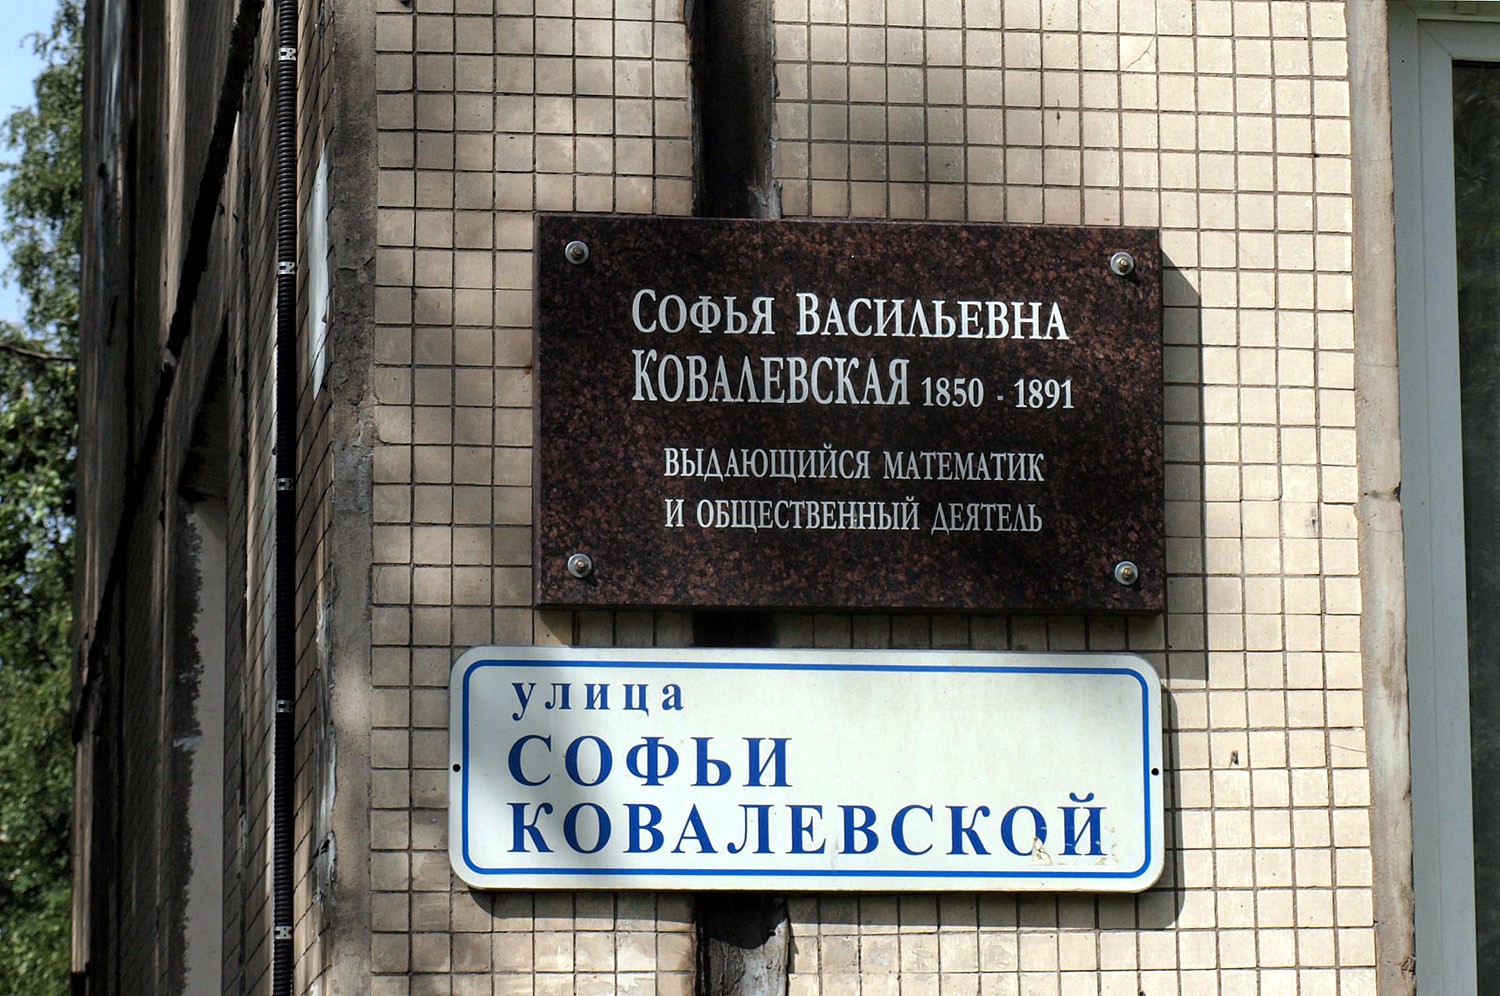 Petersburg, Улица Софьи Ковалевской, 4. Petersburg — Memorial plaques